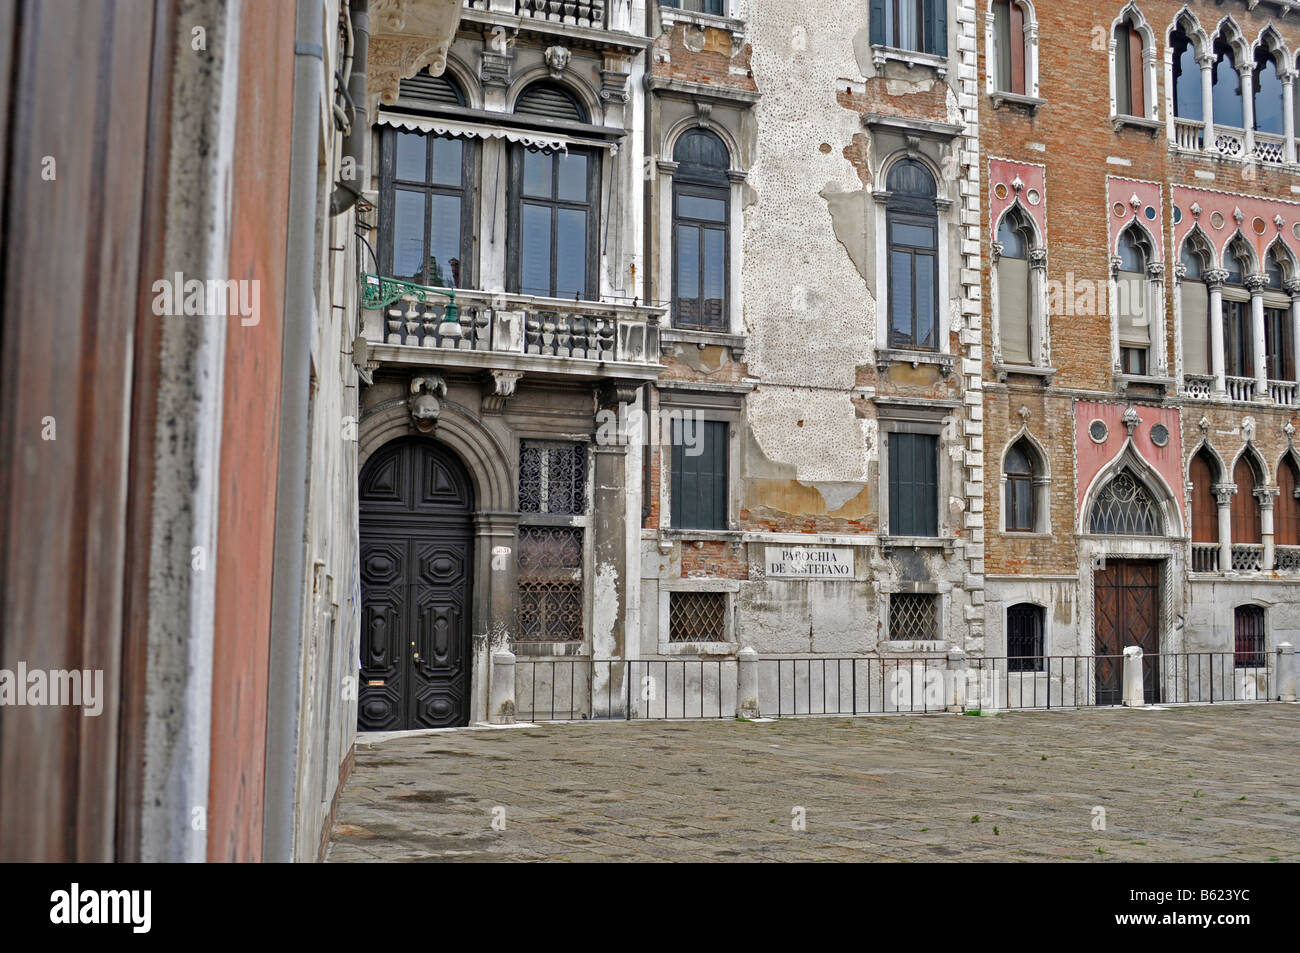 Facades of old buildings, Dorsoduro, Venice, Italy, Europe Stock Photo